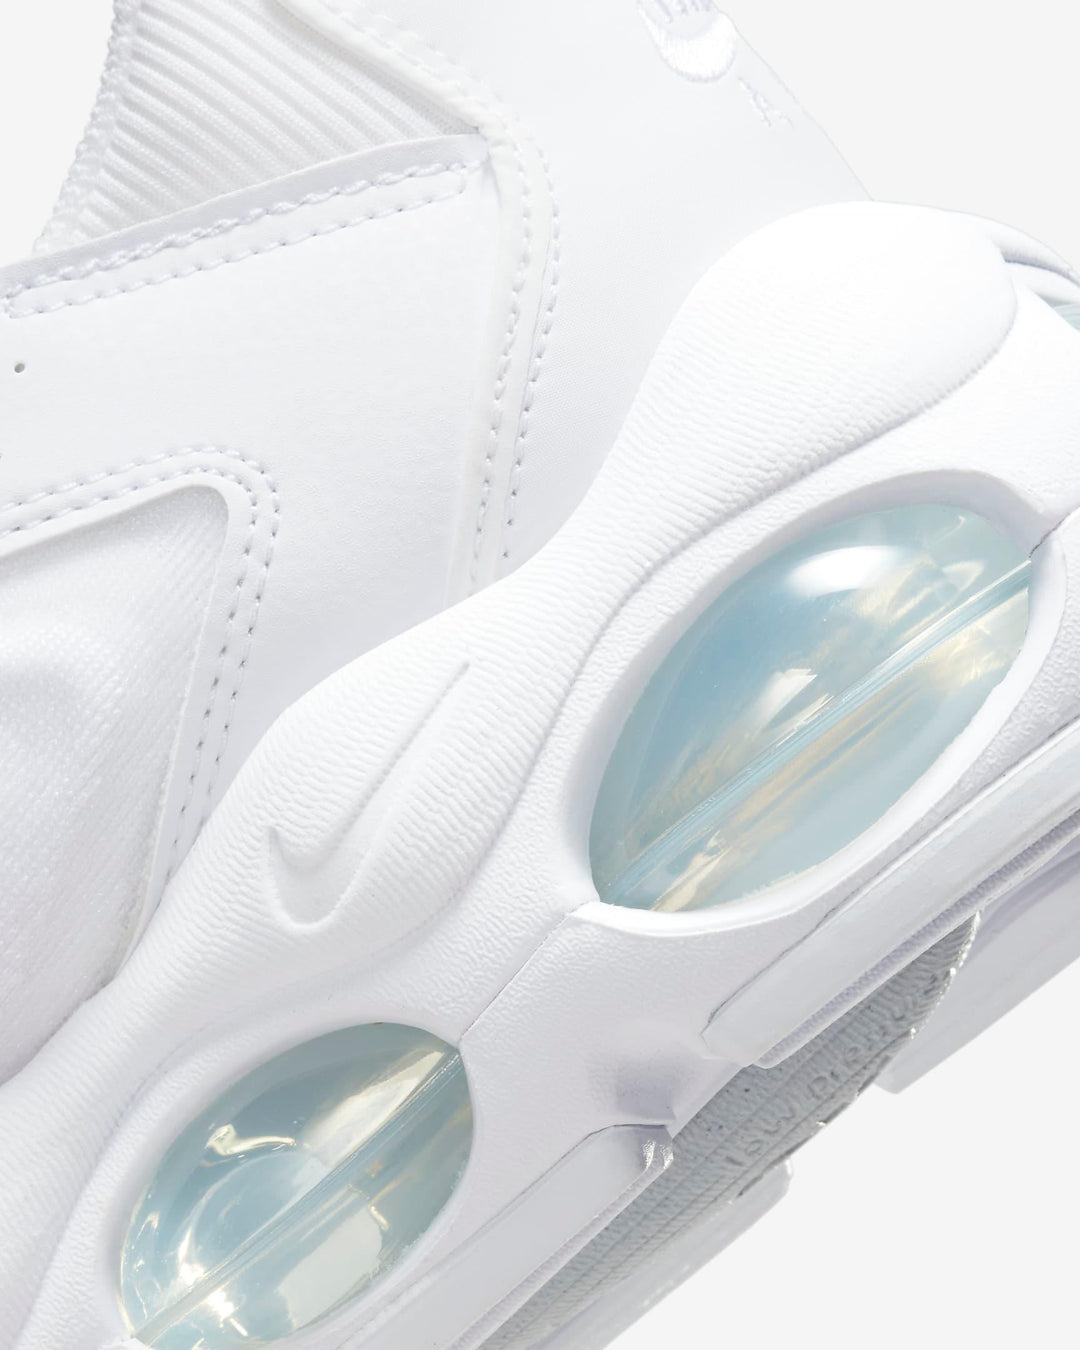 Giày Nike Air Max TW Men Shoes #White - Kallos Vietnam